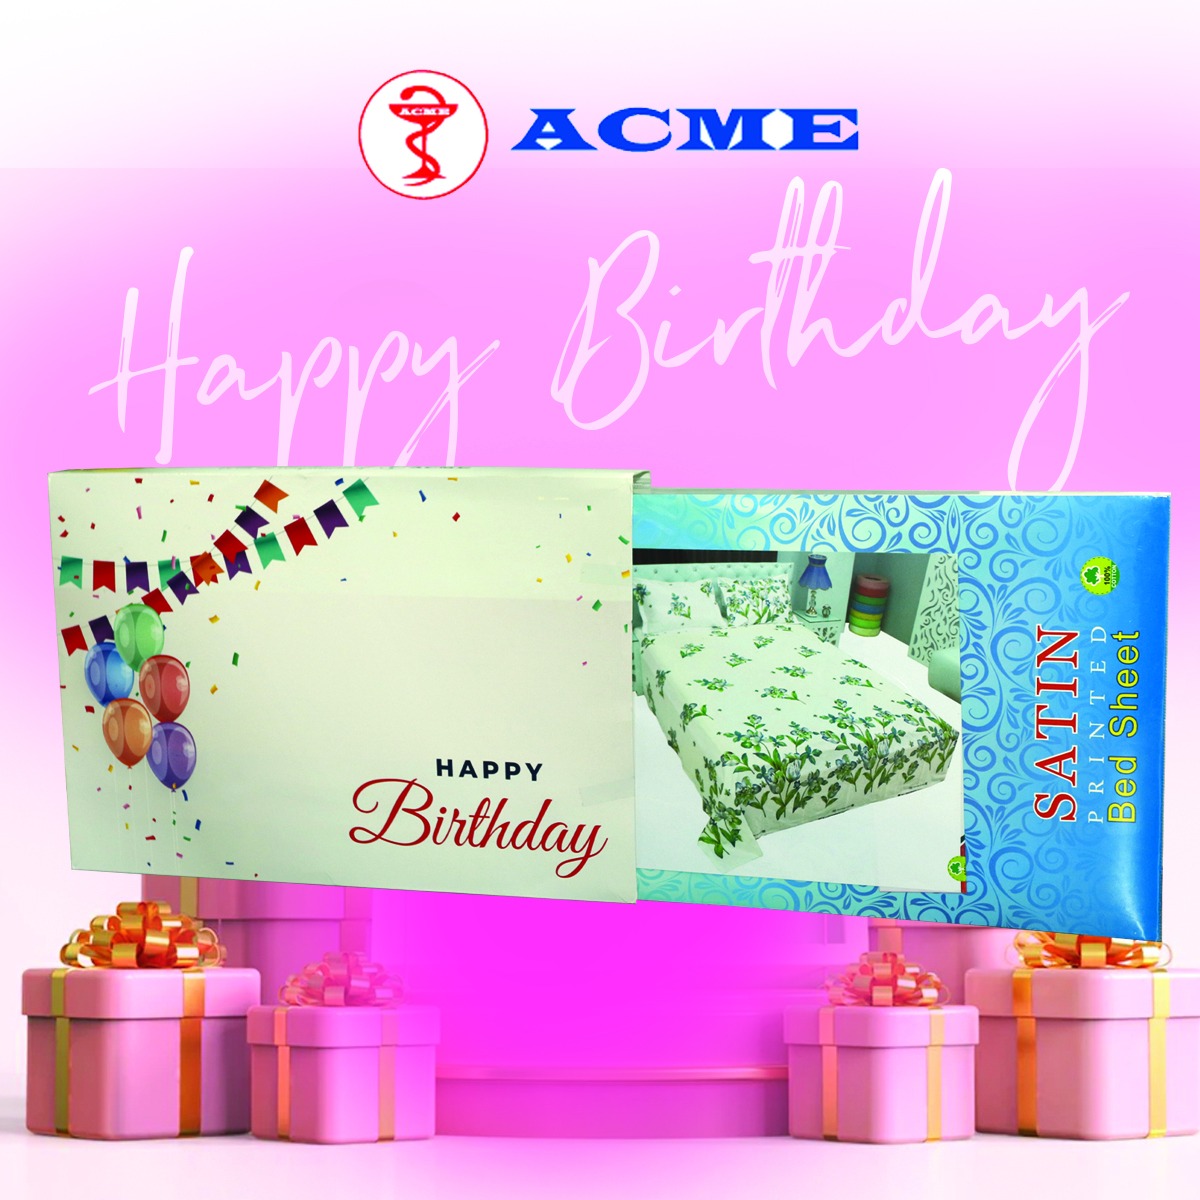 Haapy Birthday ACME (1)